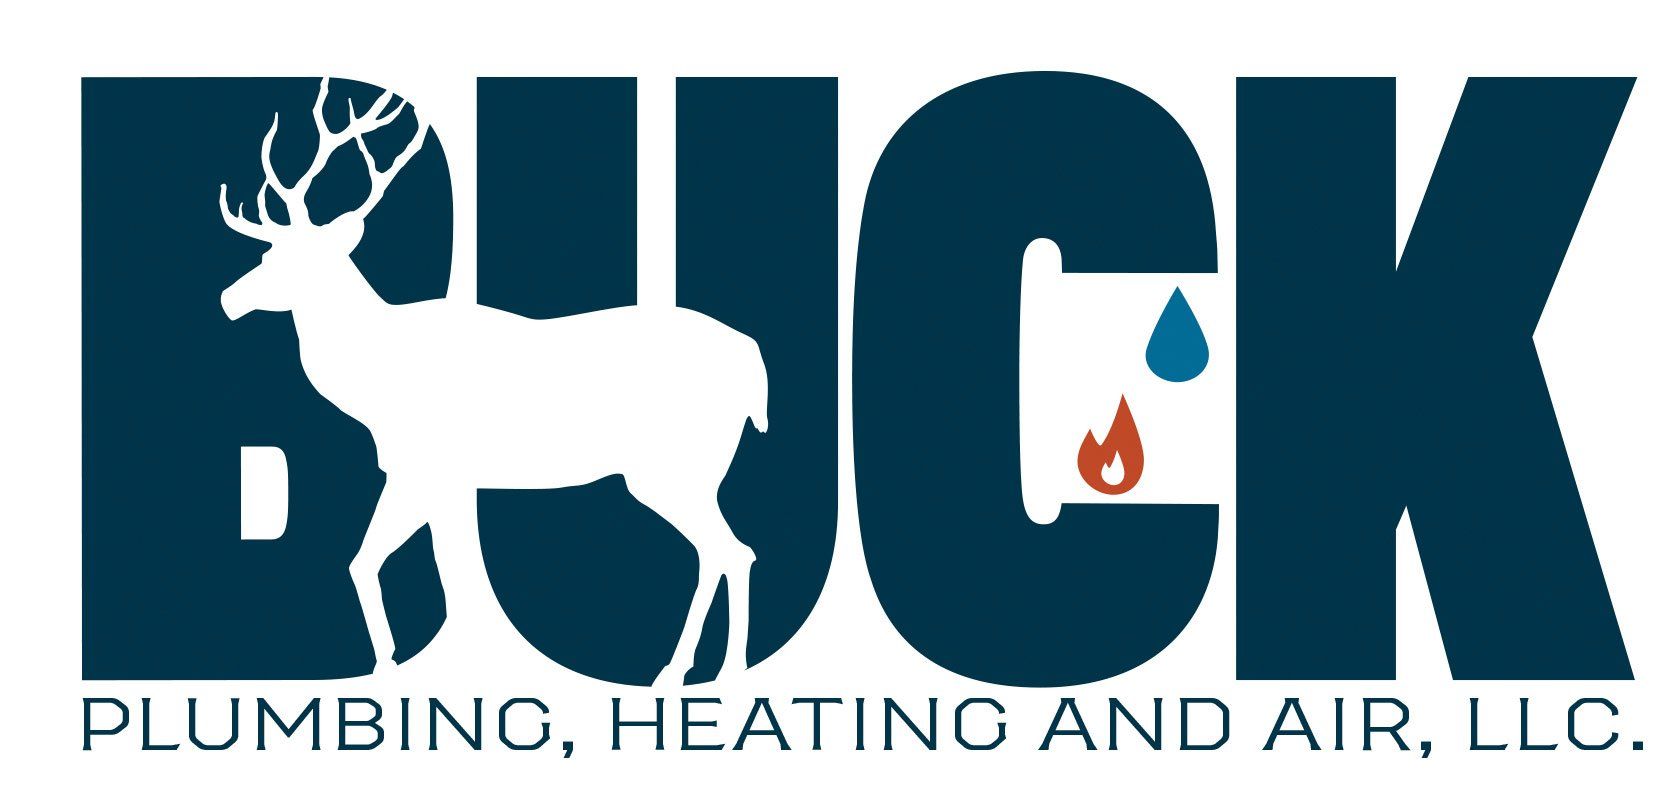 Buck Plumbing, Heating and Air